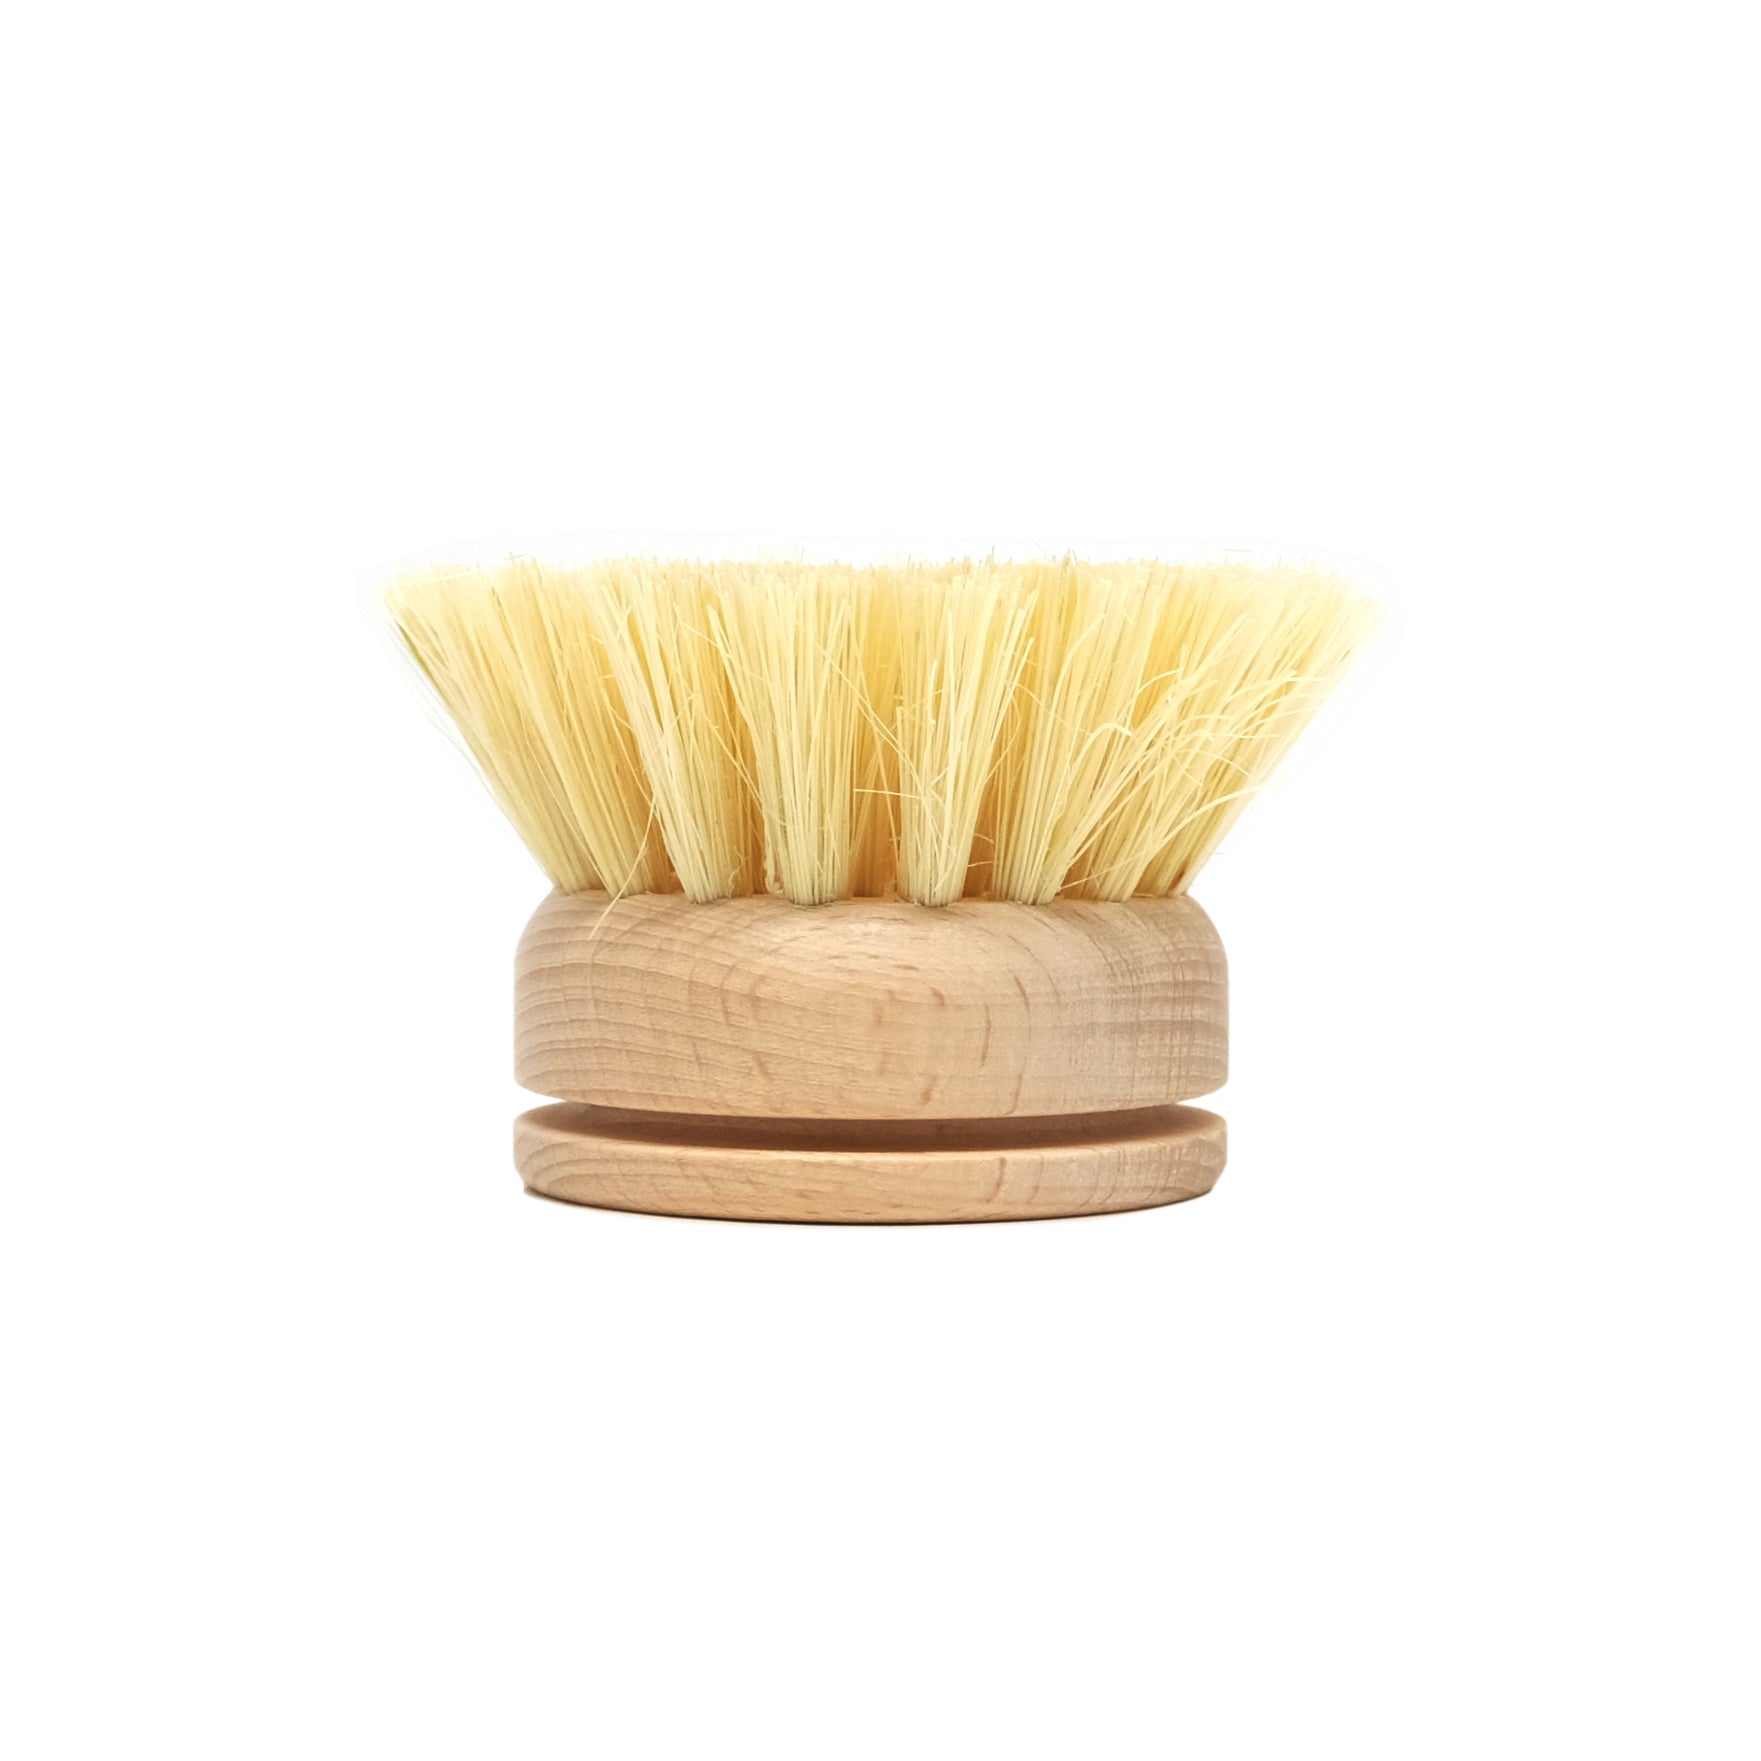 Dish brush head with sisal fiber bristles 